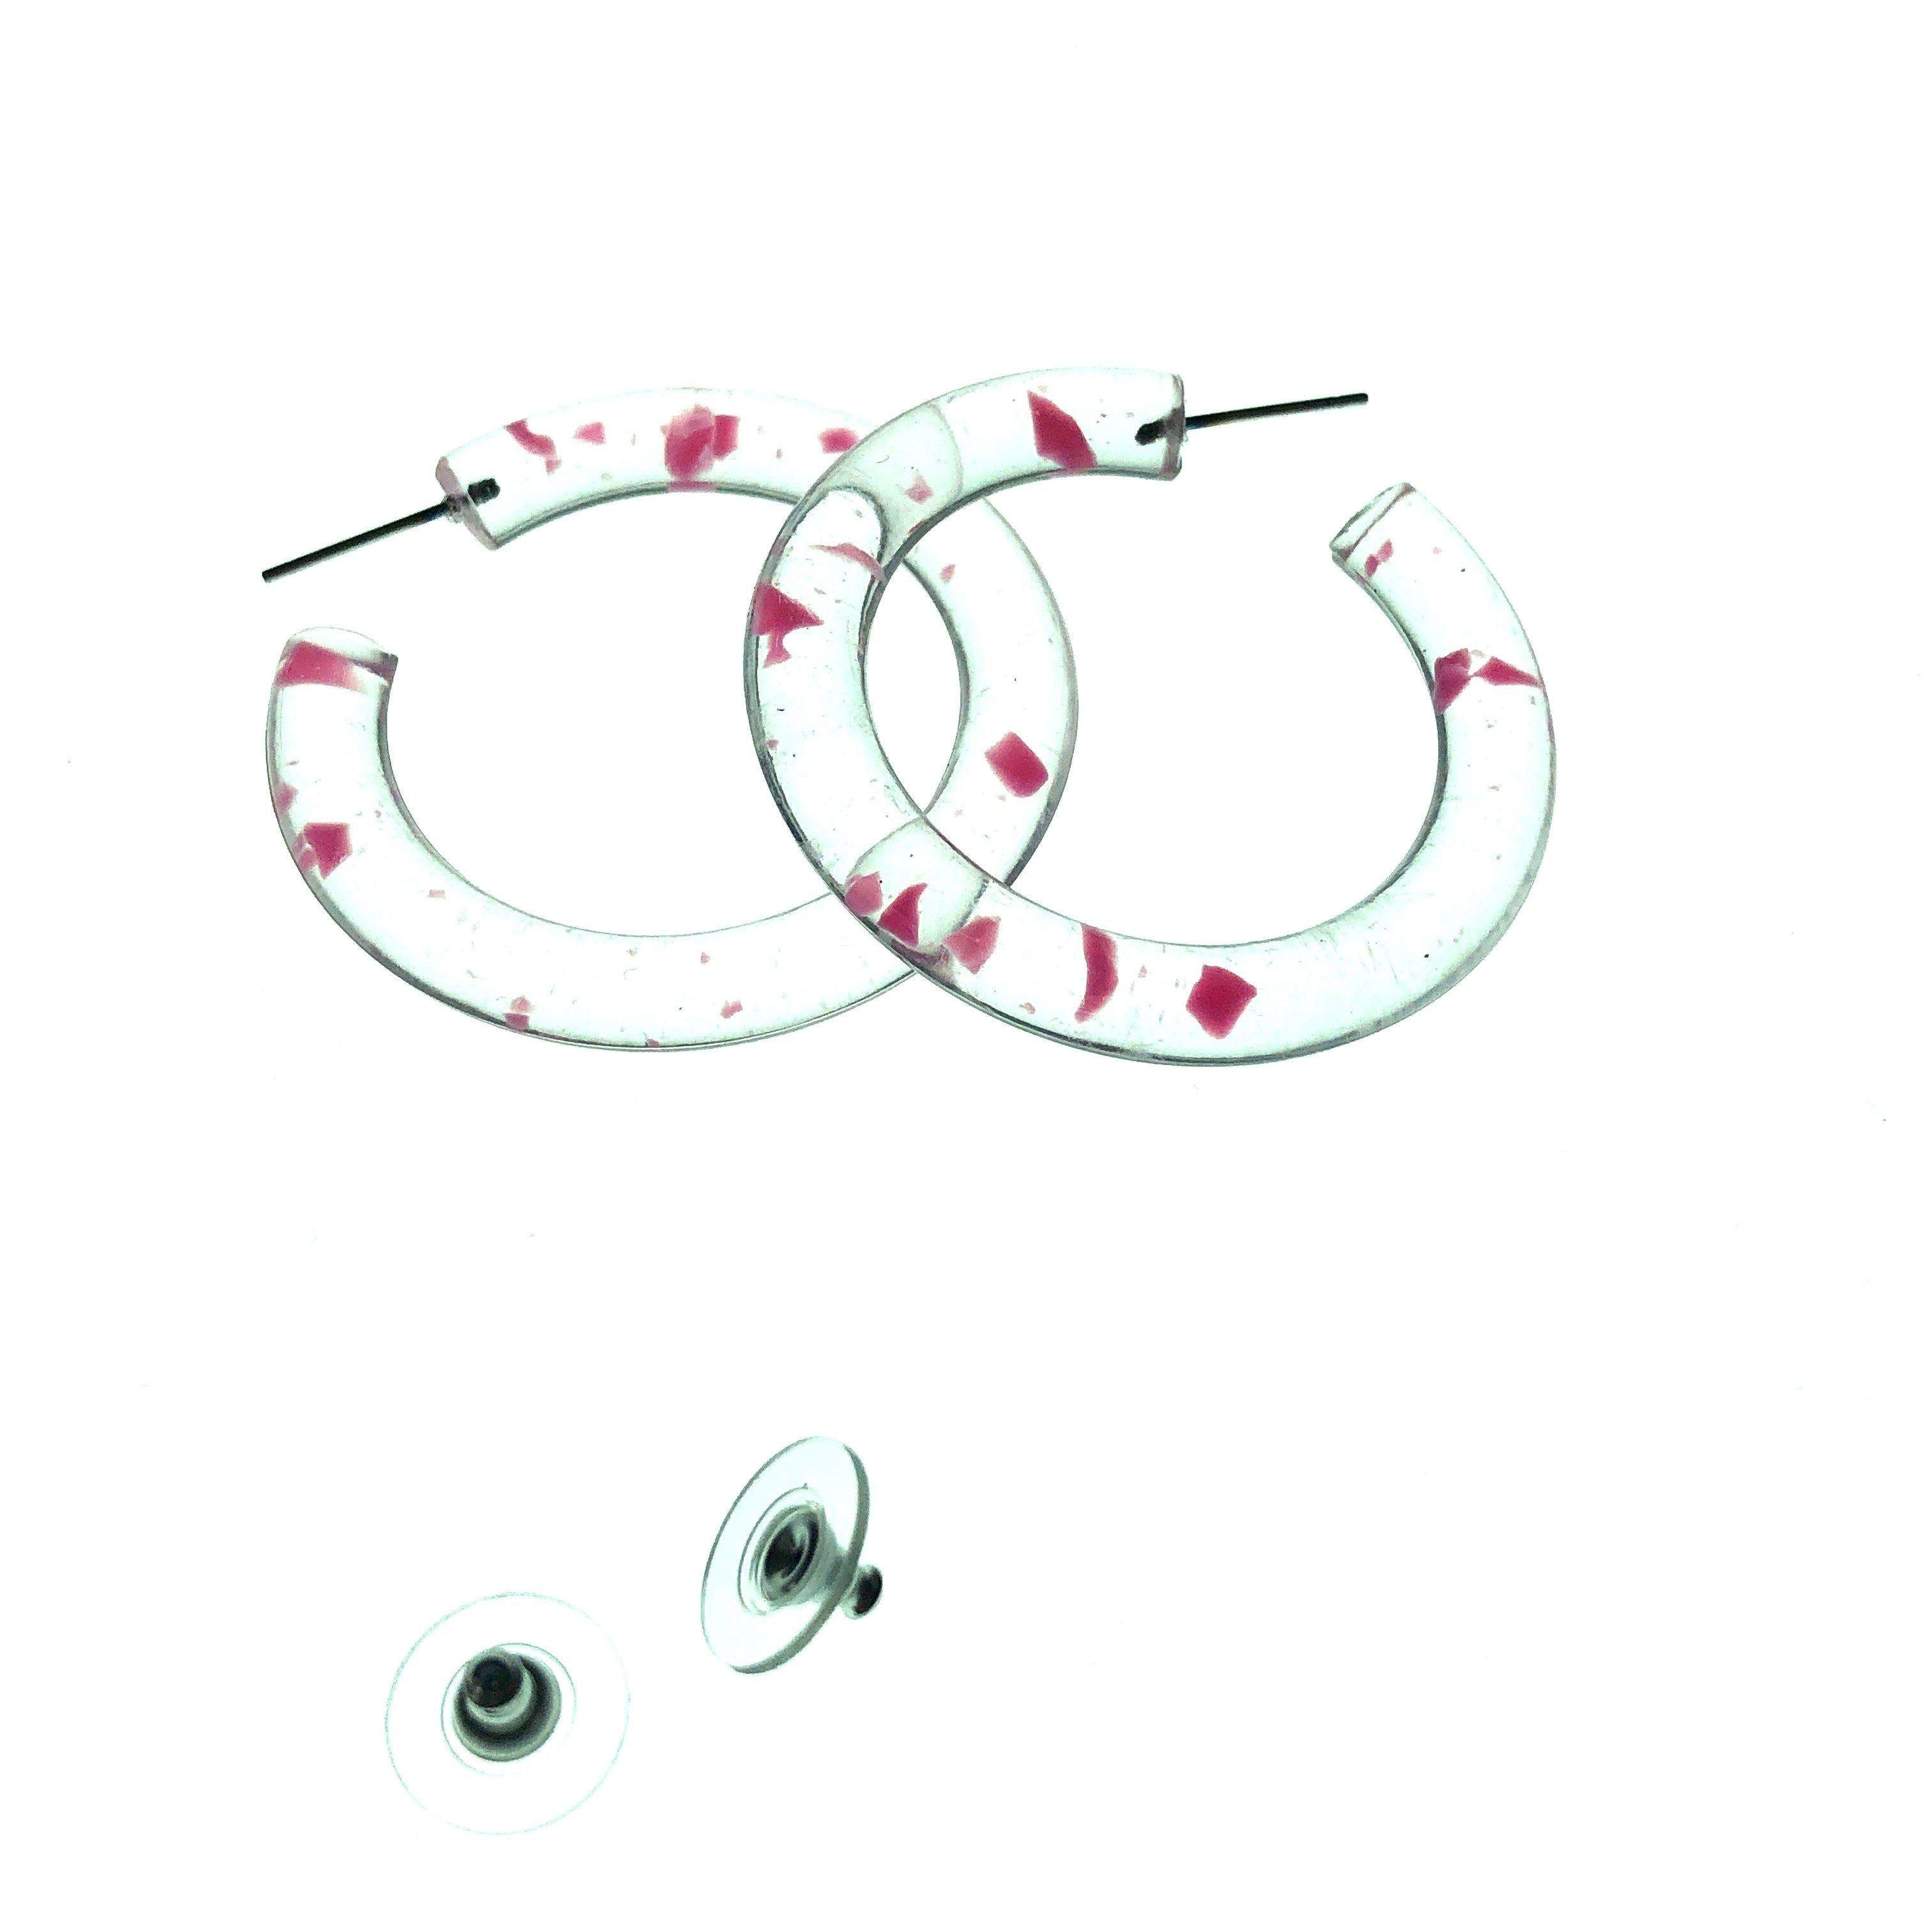 Pink &amp; Clear Confetti Hoop Earrings - 1.75&quot;